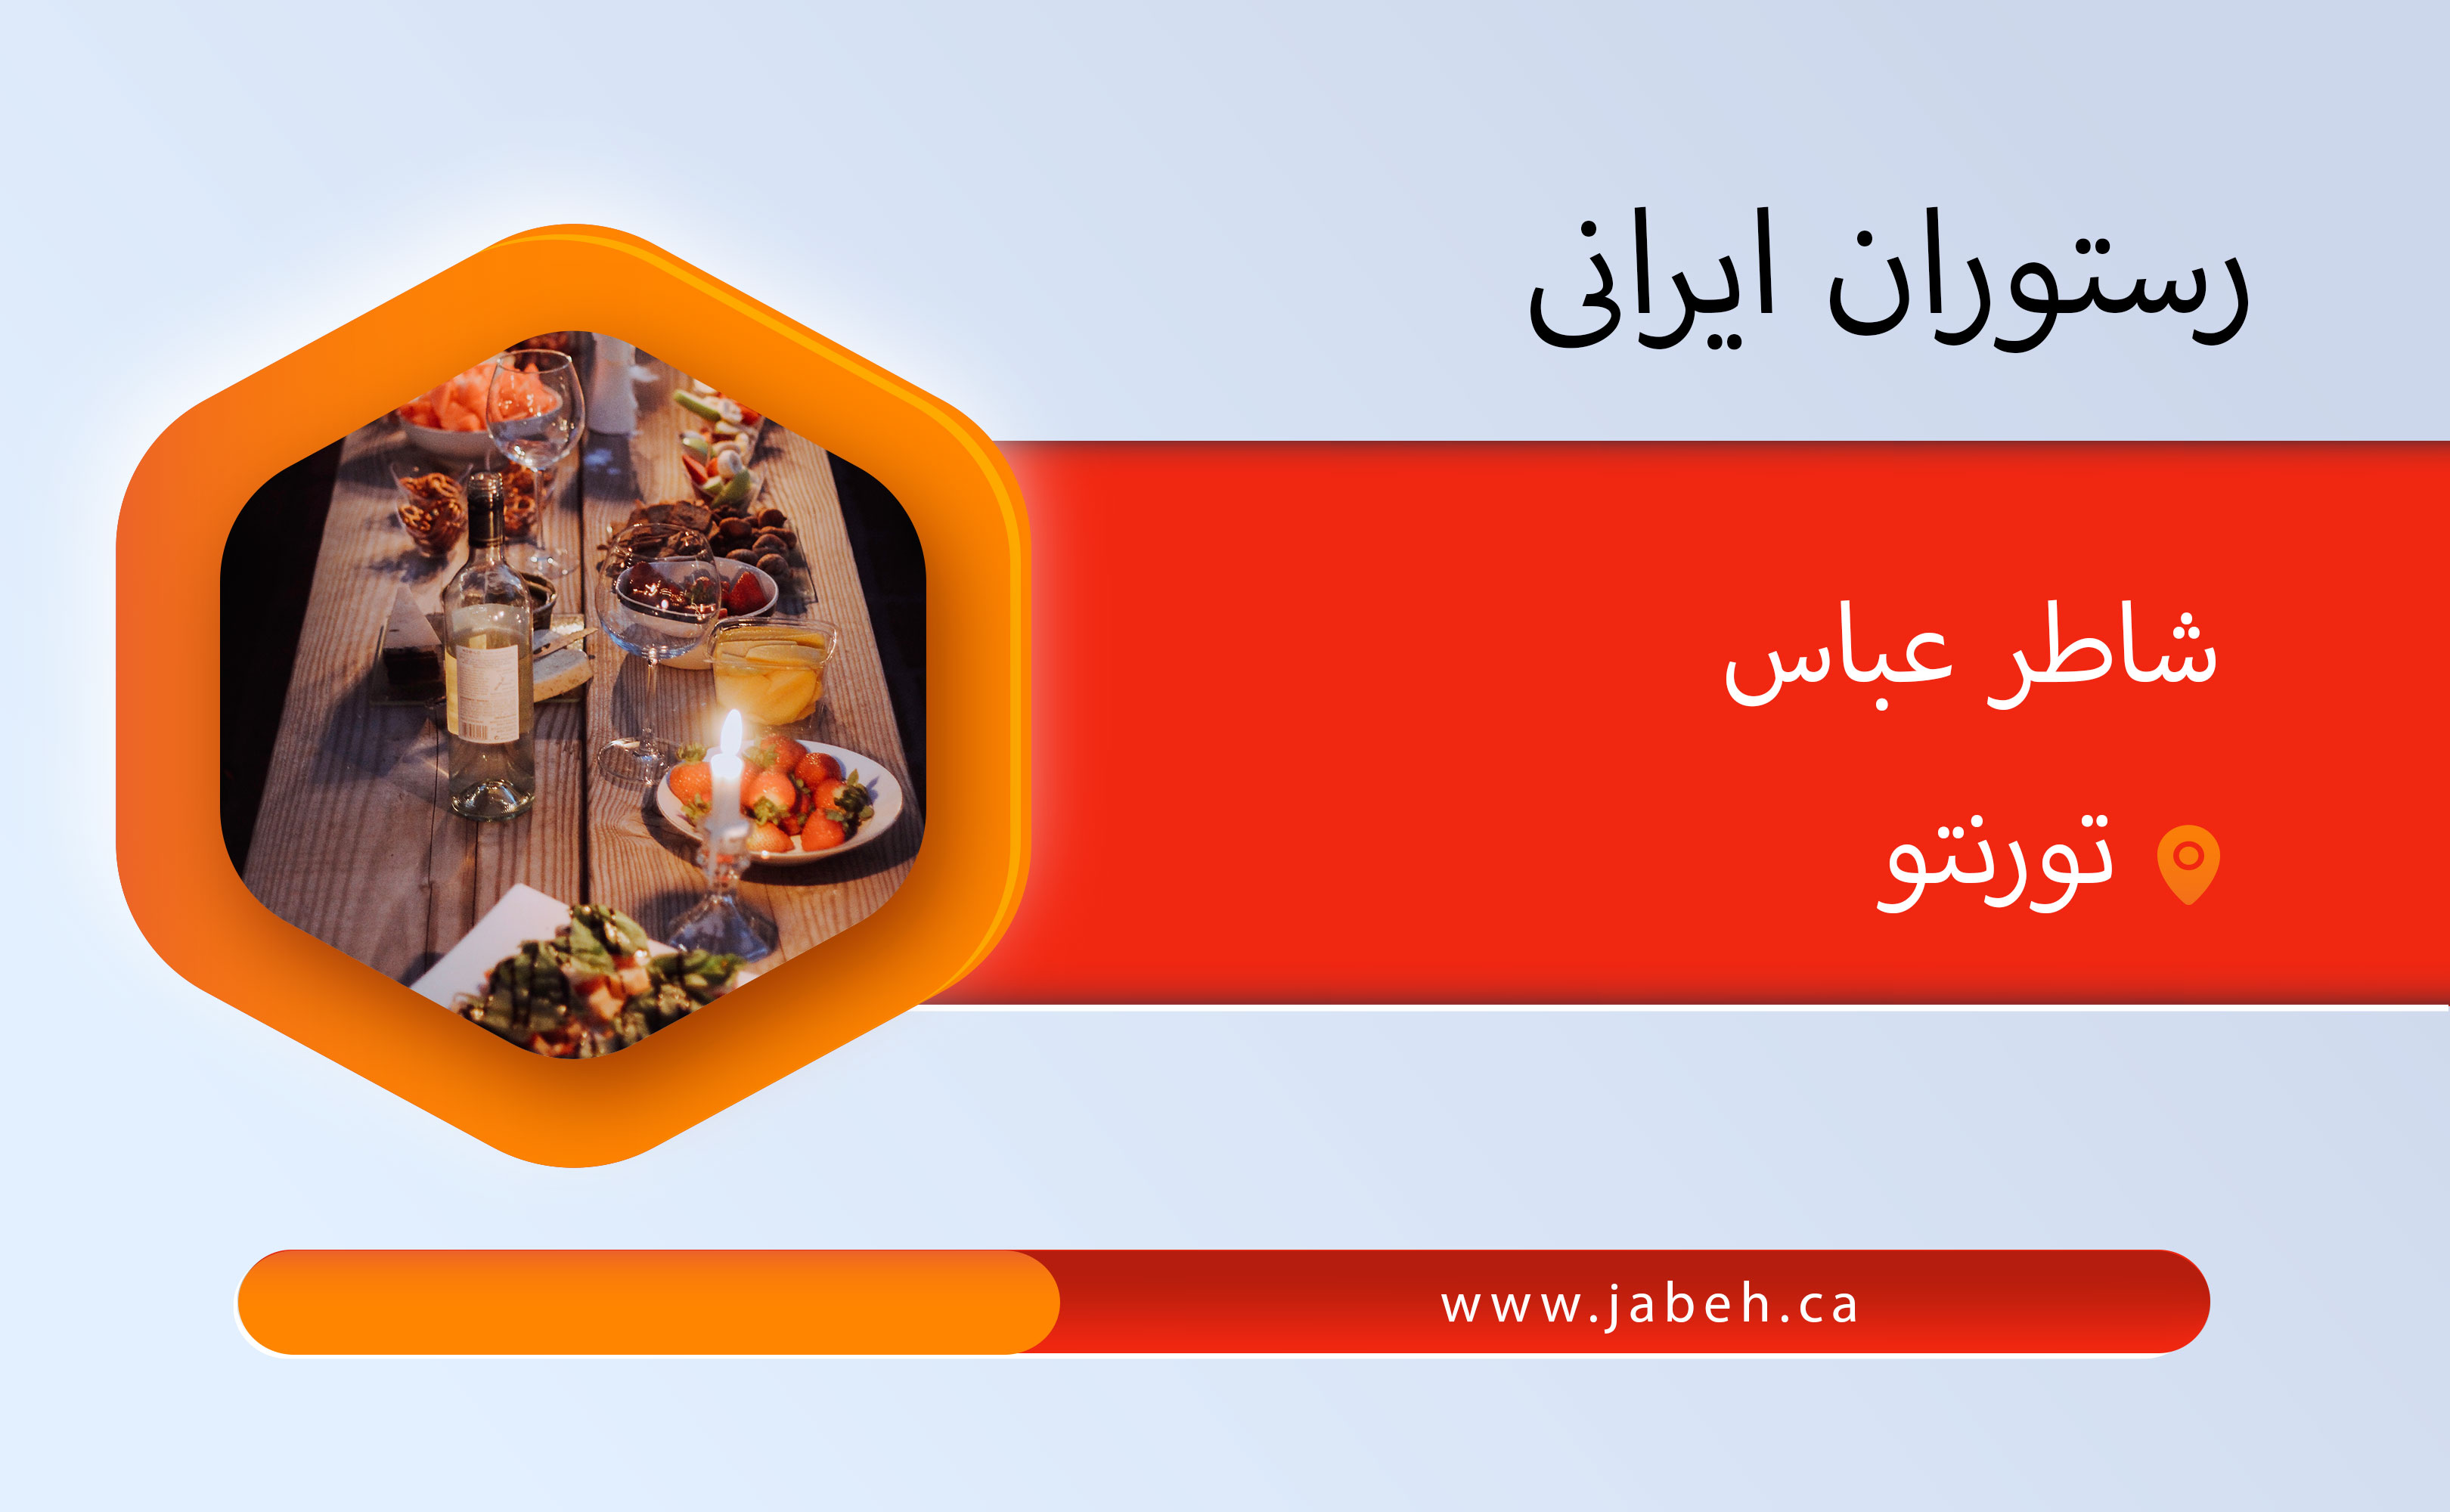 Shater Abbas Iranian restaurant in Toronto